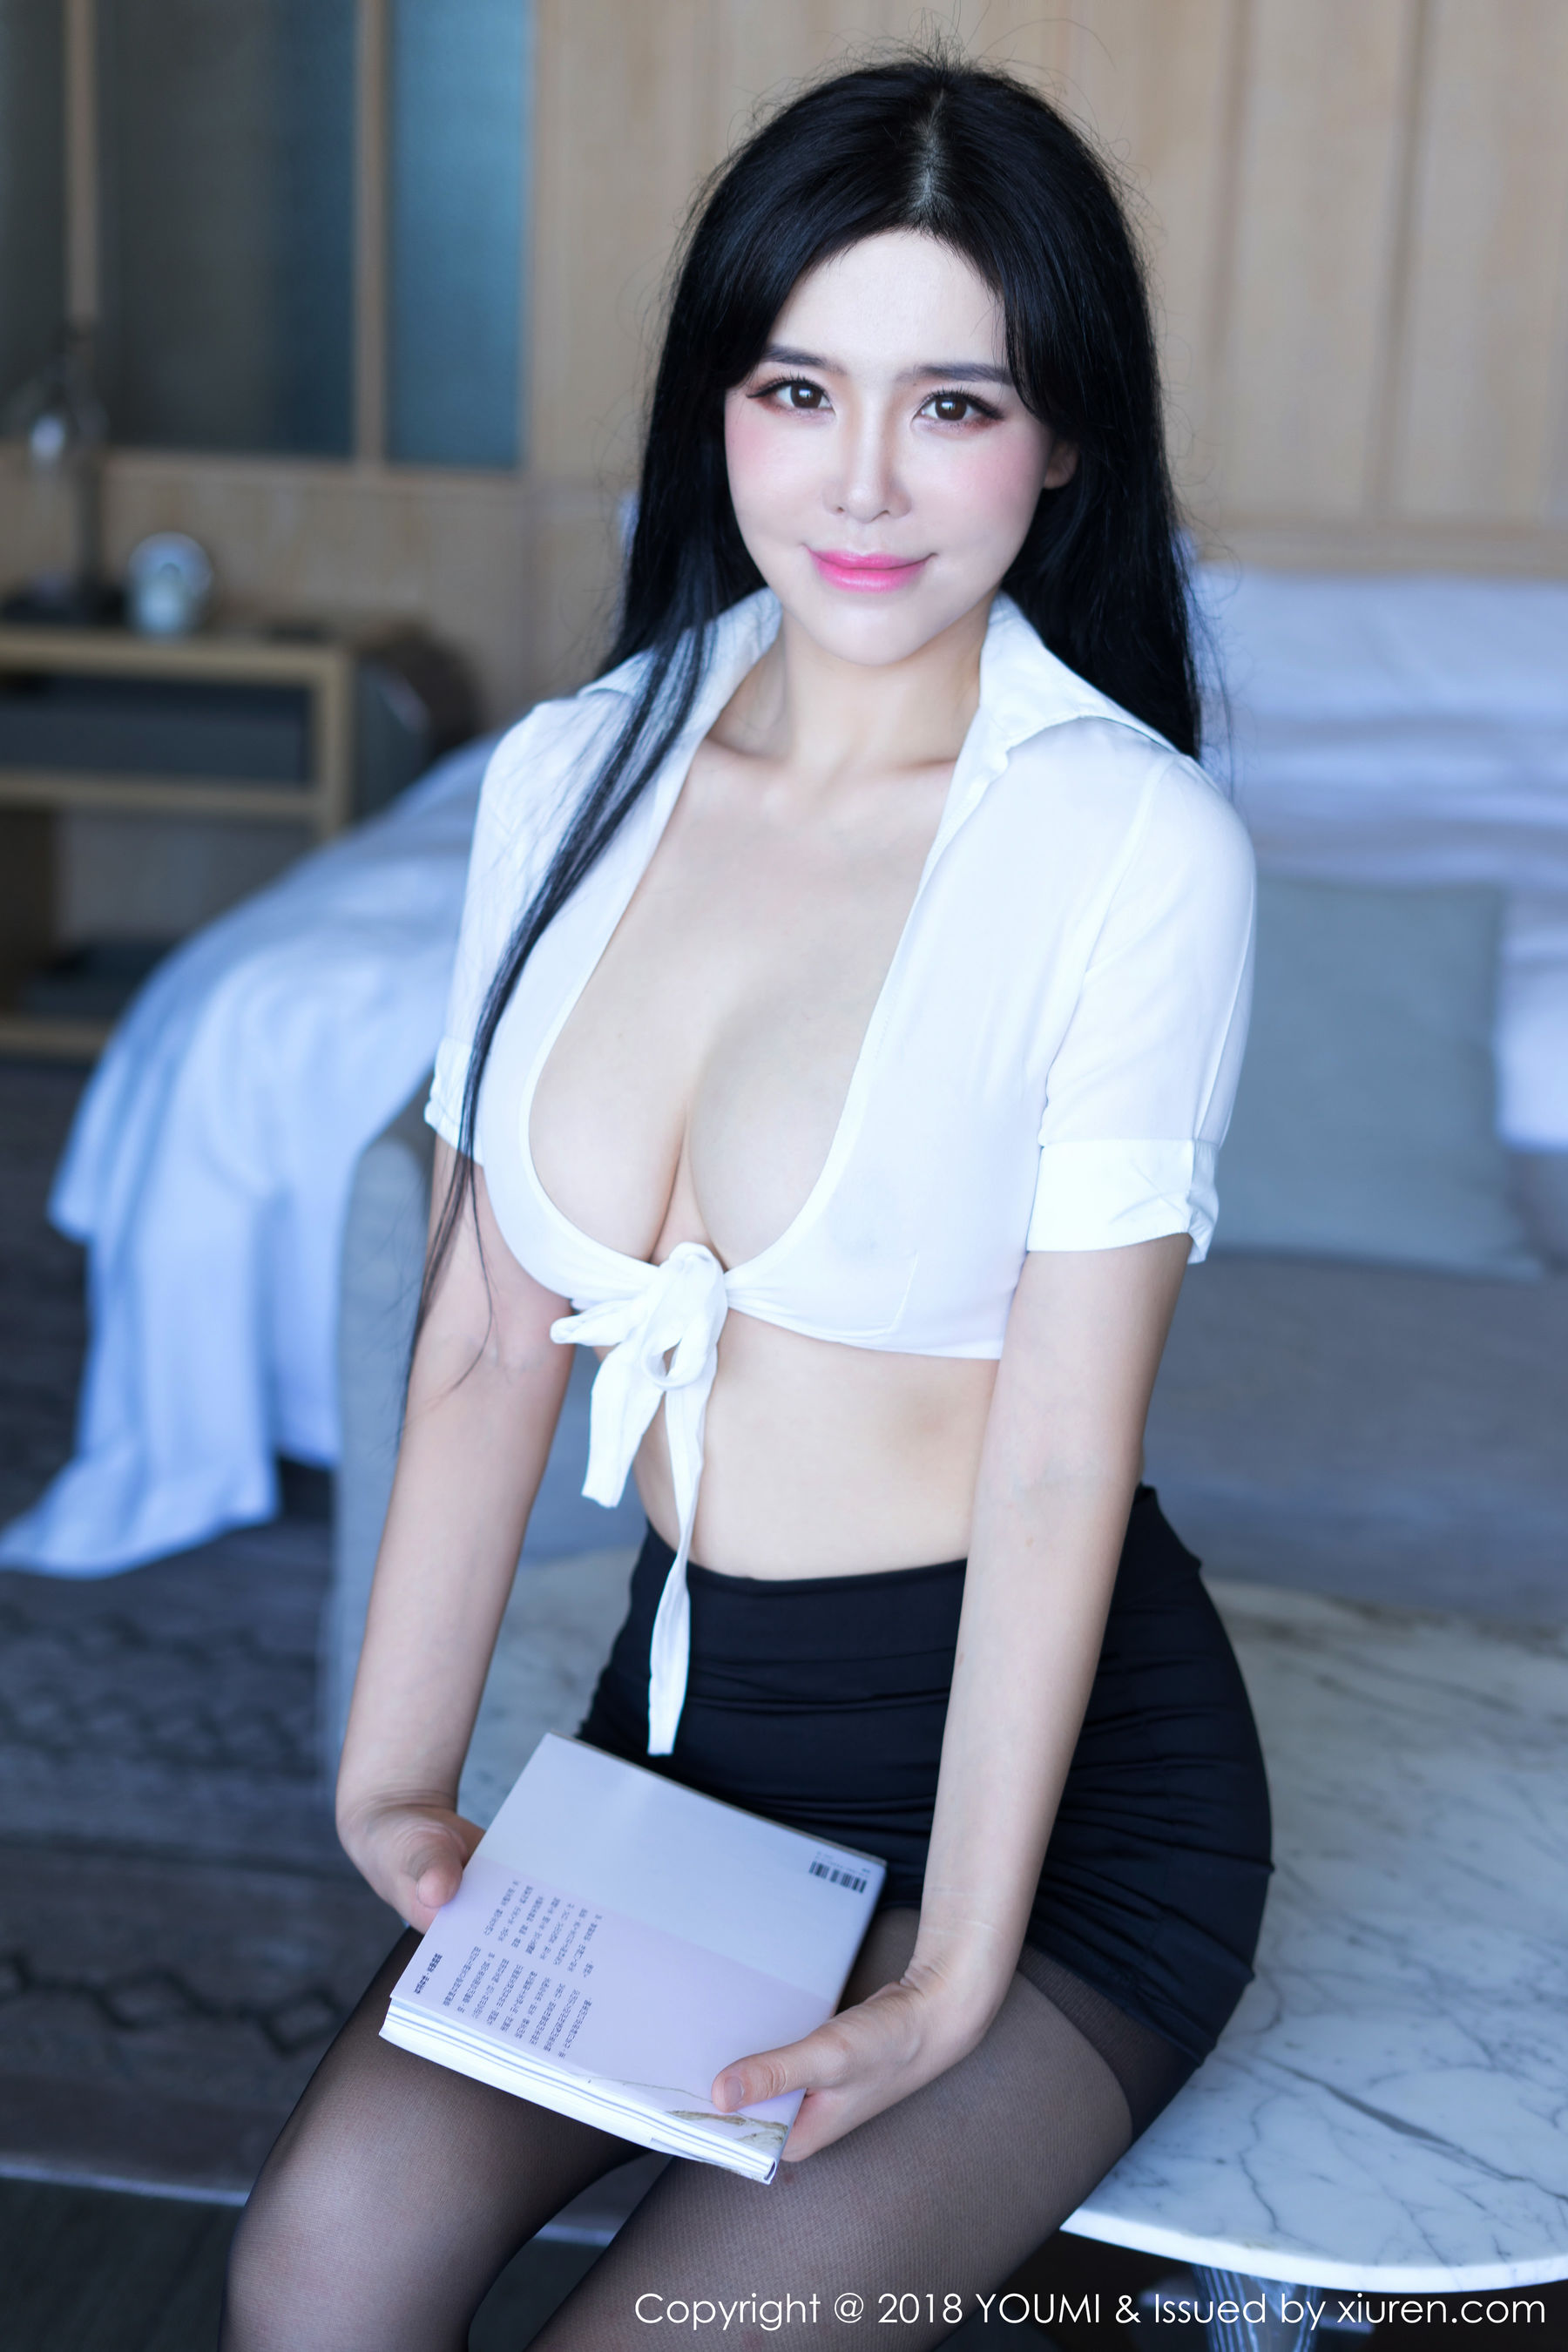 Liu Yuer "The Female Secretary in White Shirt and Black Stockings"...